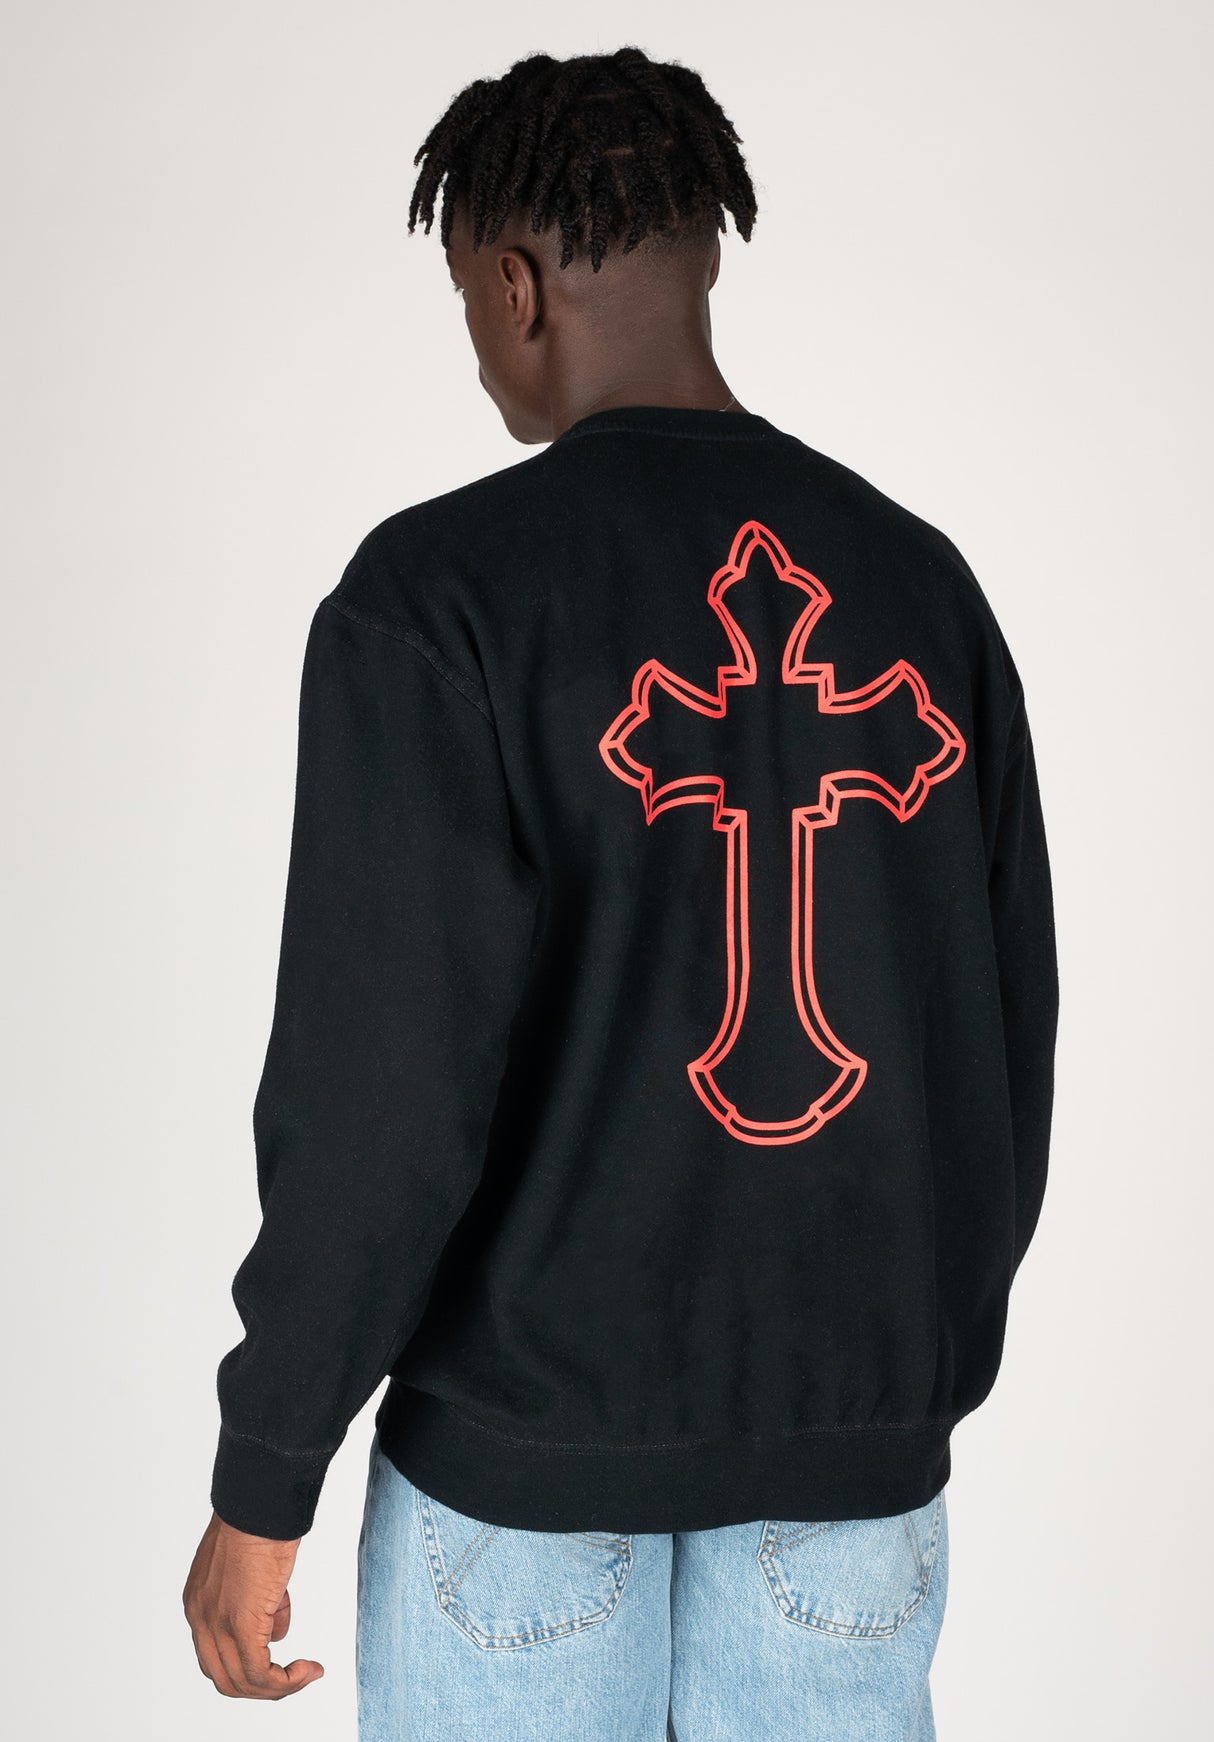 Legend Tupac x Men – Skateboards in Primitive TITUS black Sweatshirt for